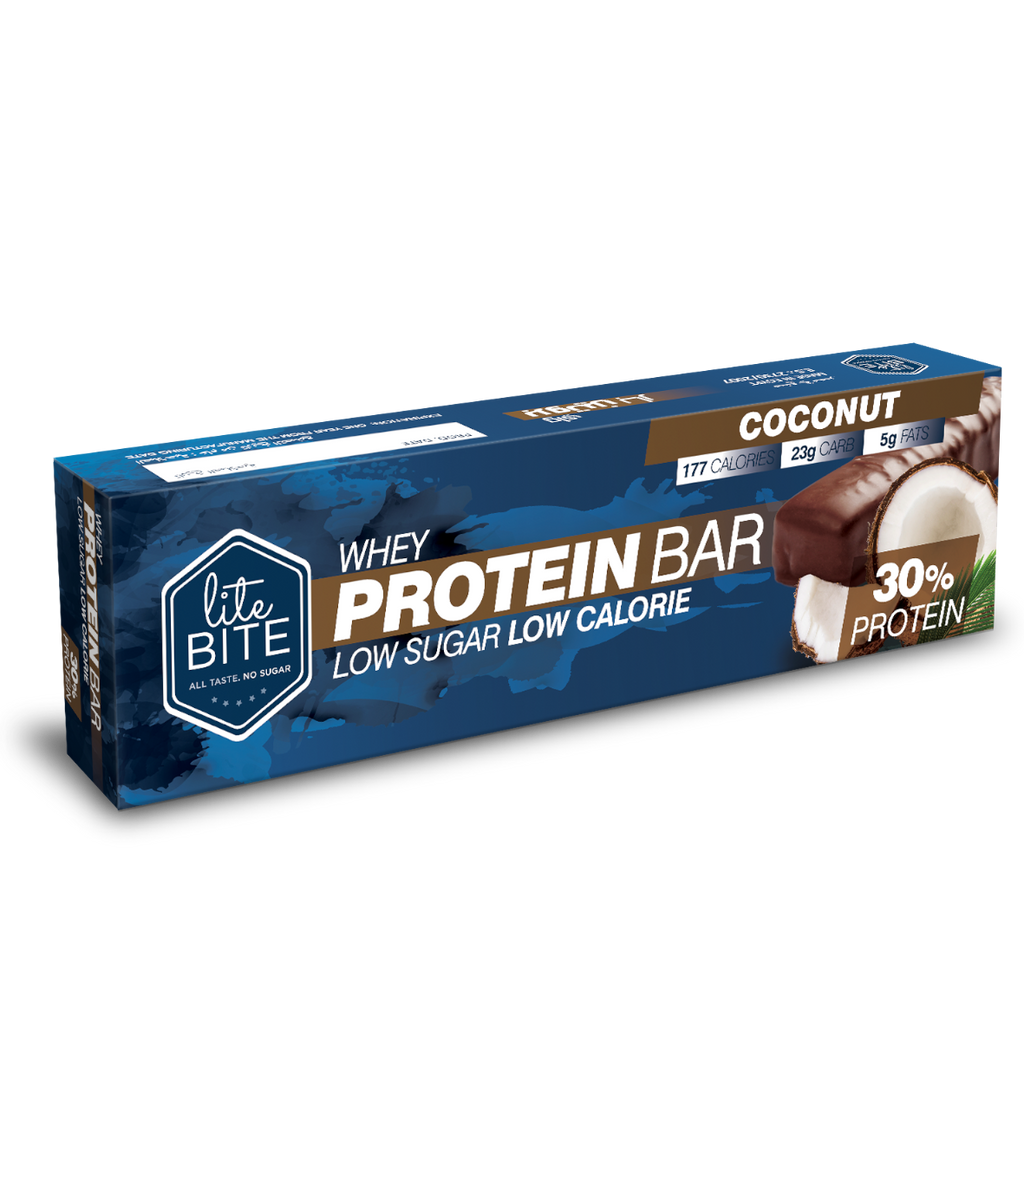 Coconut Protein Bar - بروتين بار جوز هند